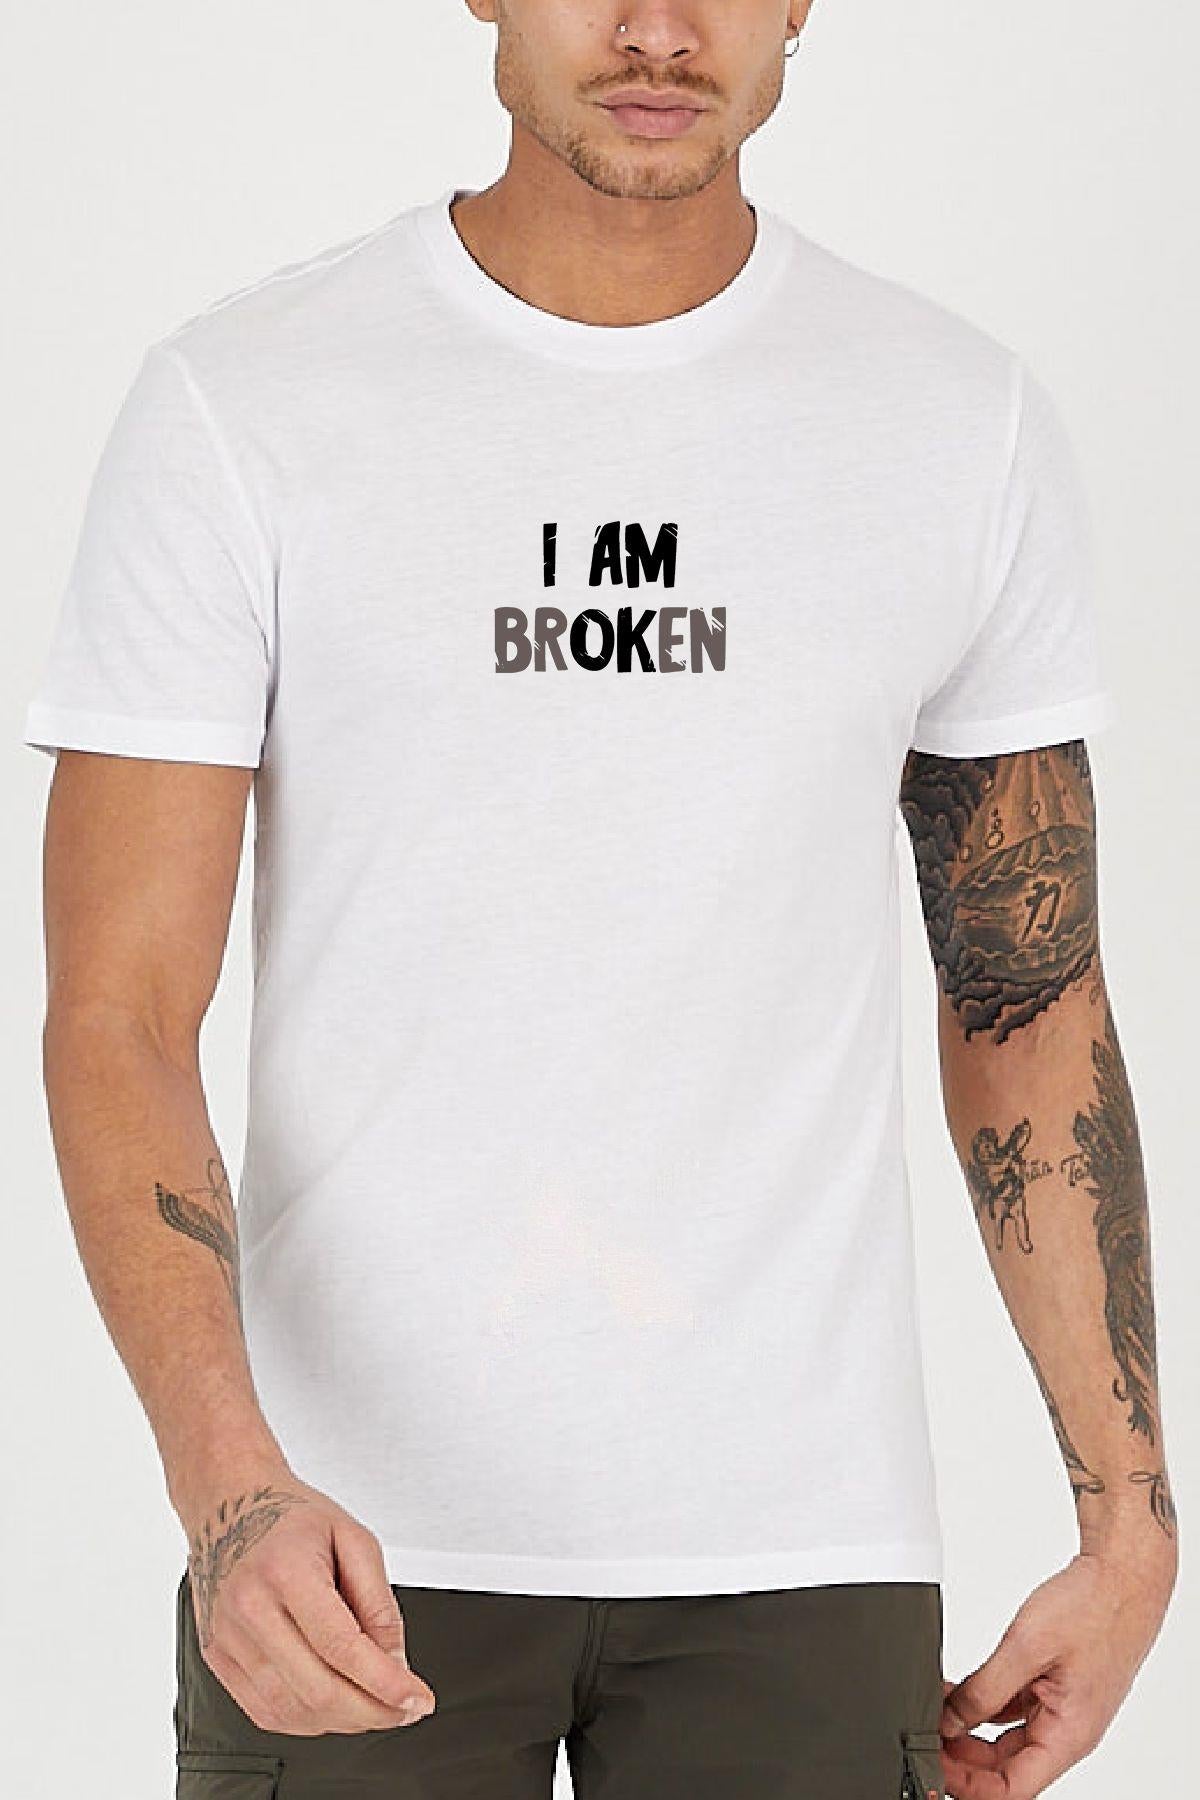 Brcked slogan printed Crew Neck men's t -shirt